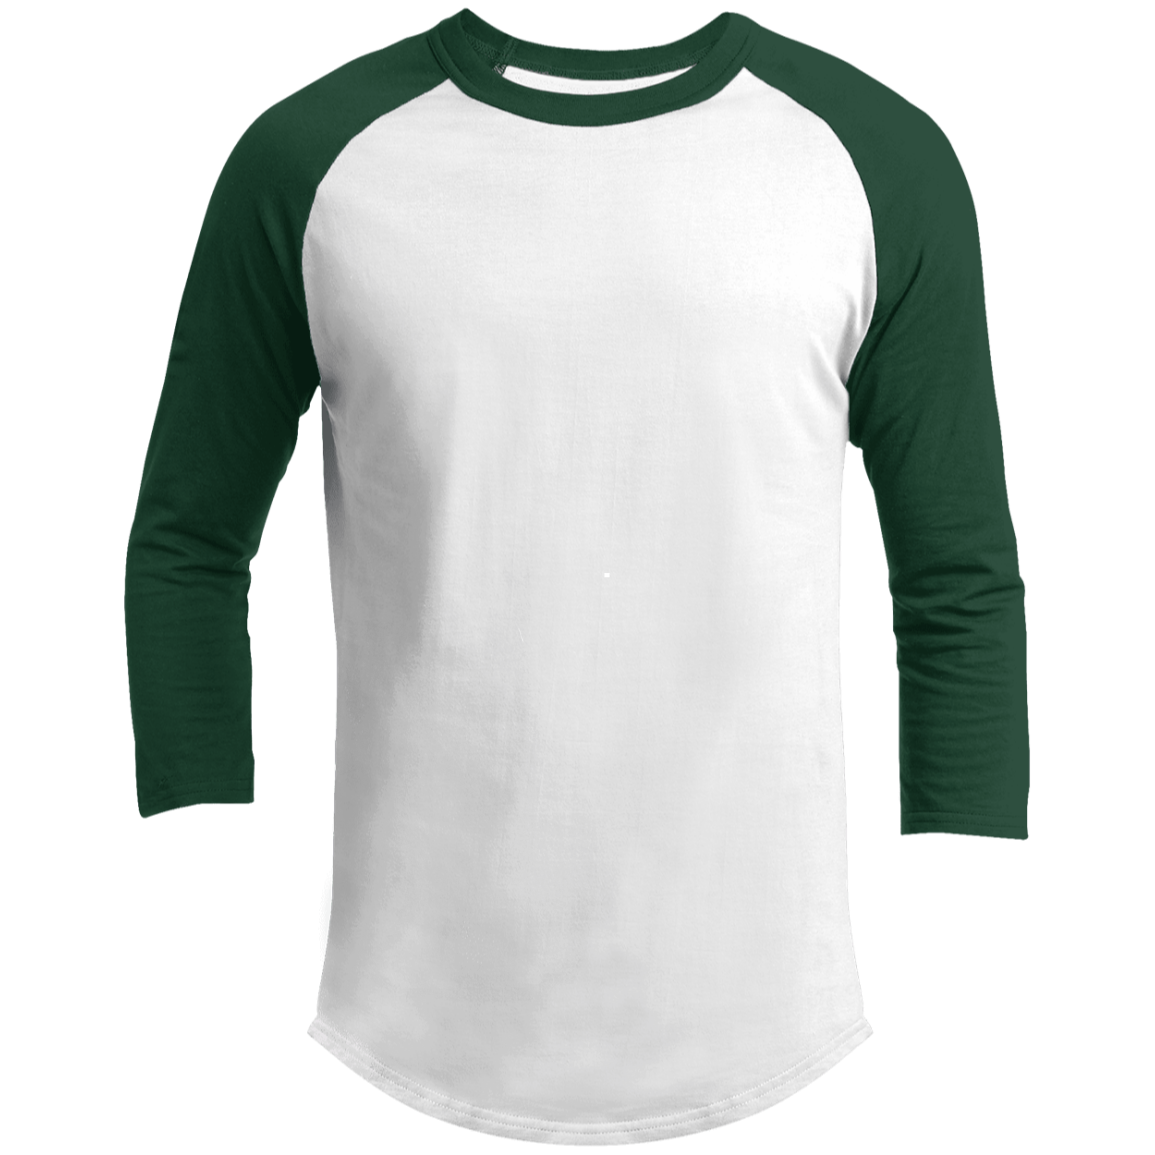 Customizable 3/4 Sleeve Raglan Holiday T-shirts